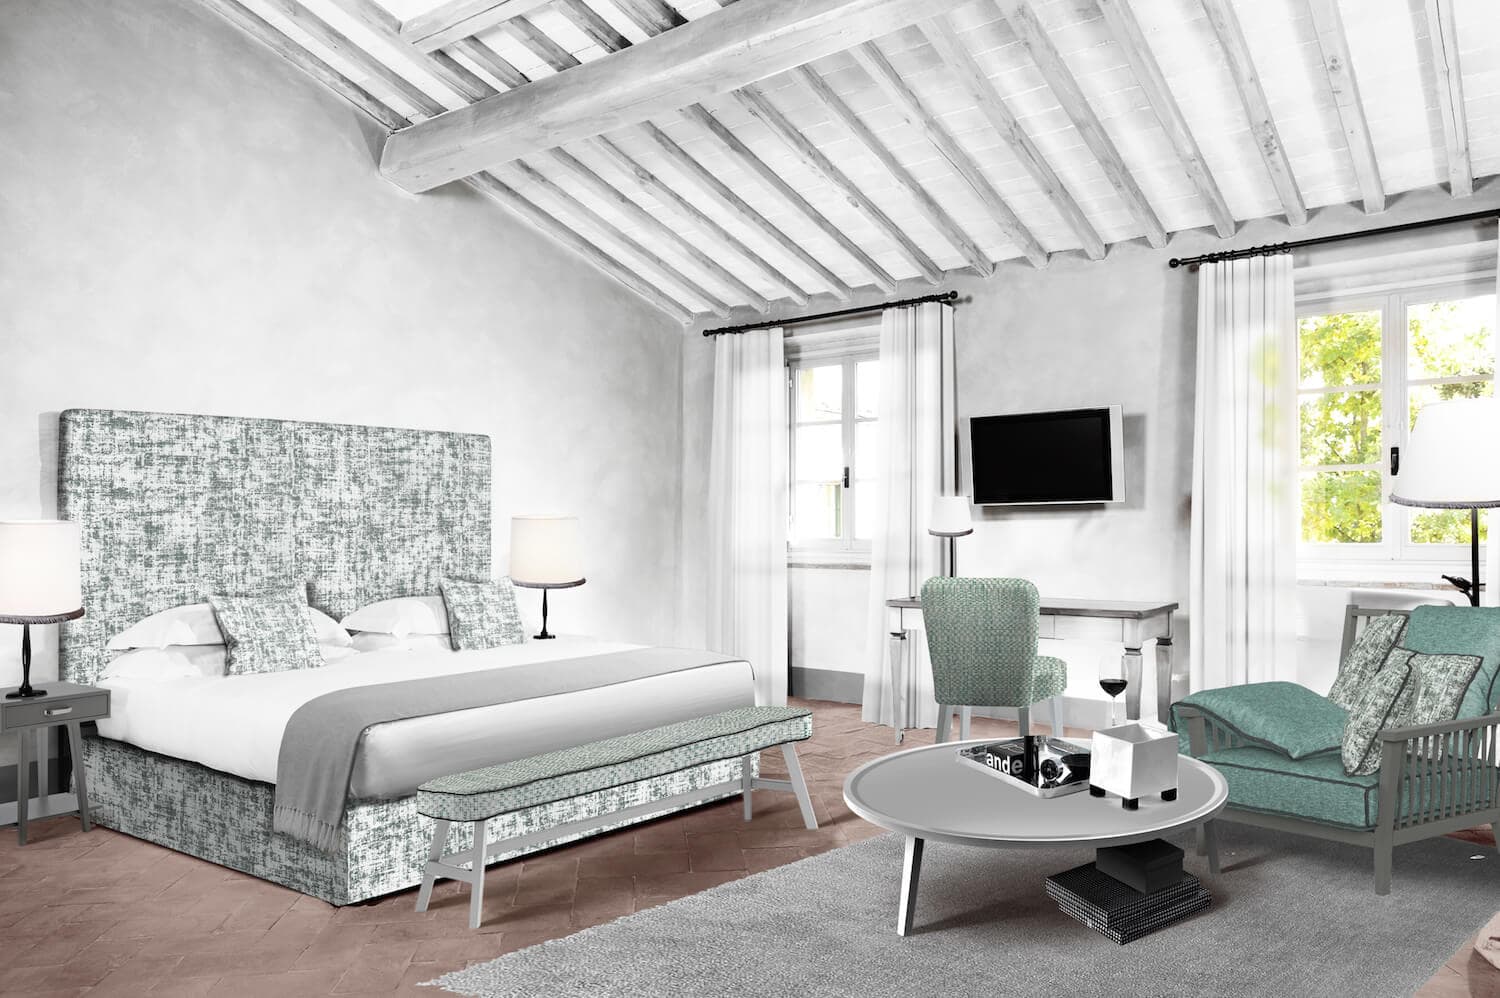 COMO Castello Del Nero como hotel and resorts new wellness retreats wellness italy